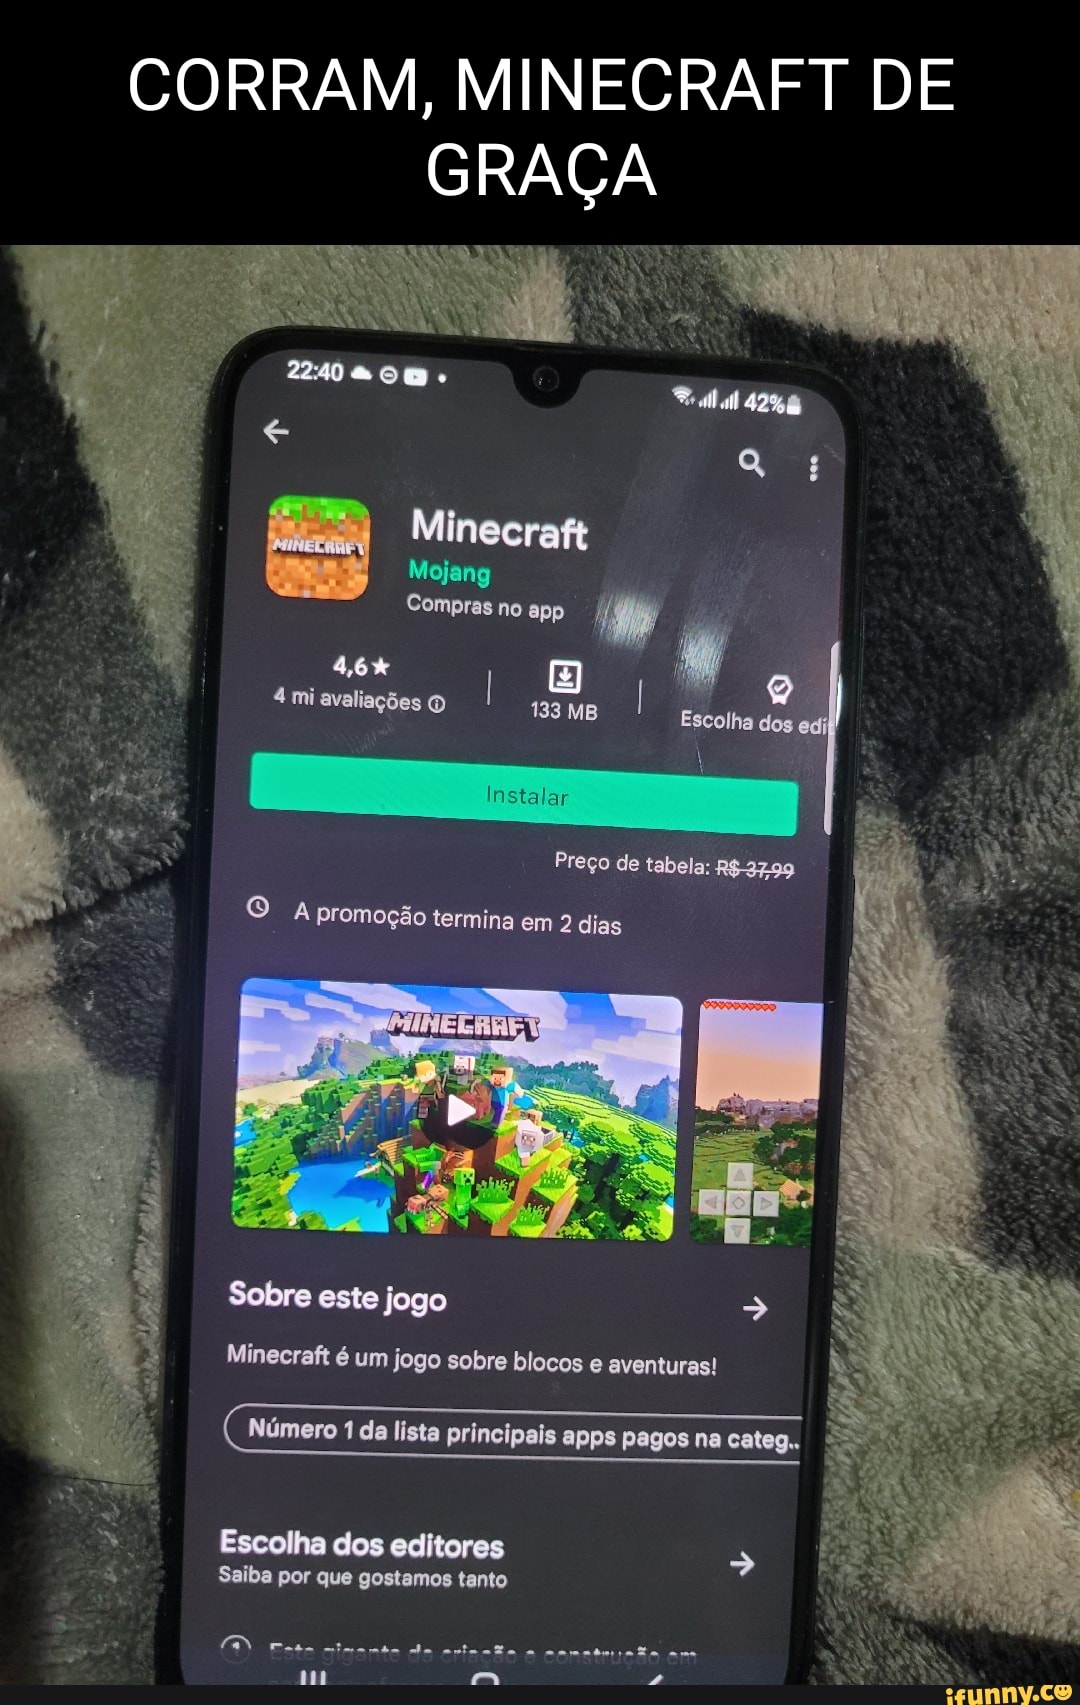 CORRAM, MINECRAFT DE GRAÇA 2240 Minecraft ha, Mojang Compras no app 4,6% I 4